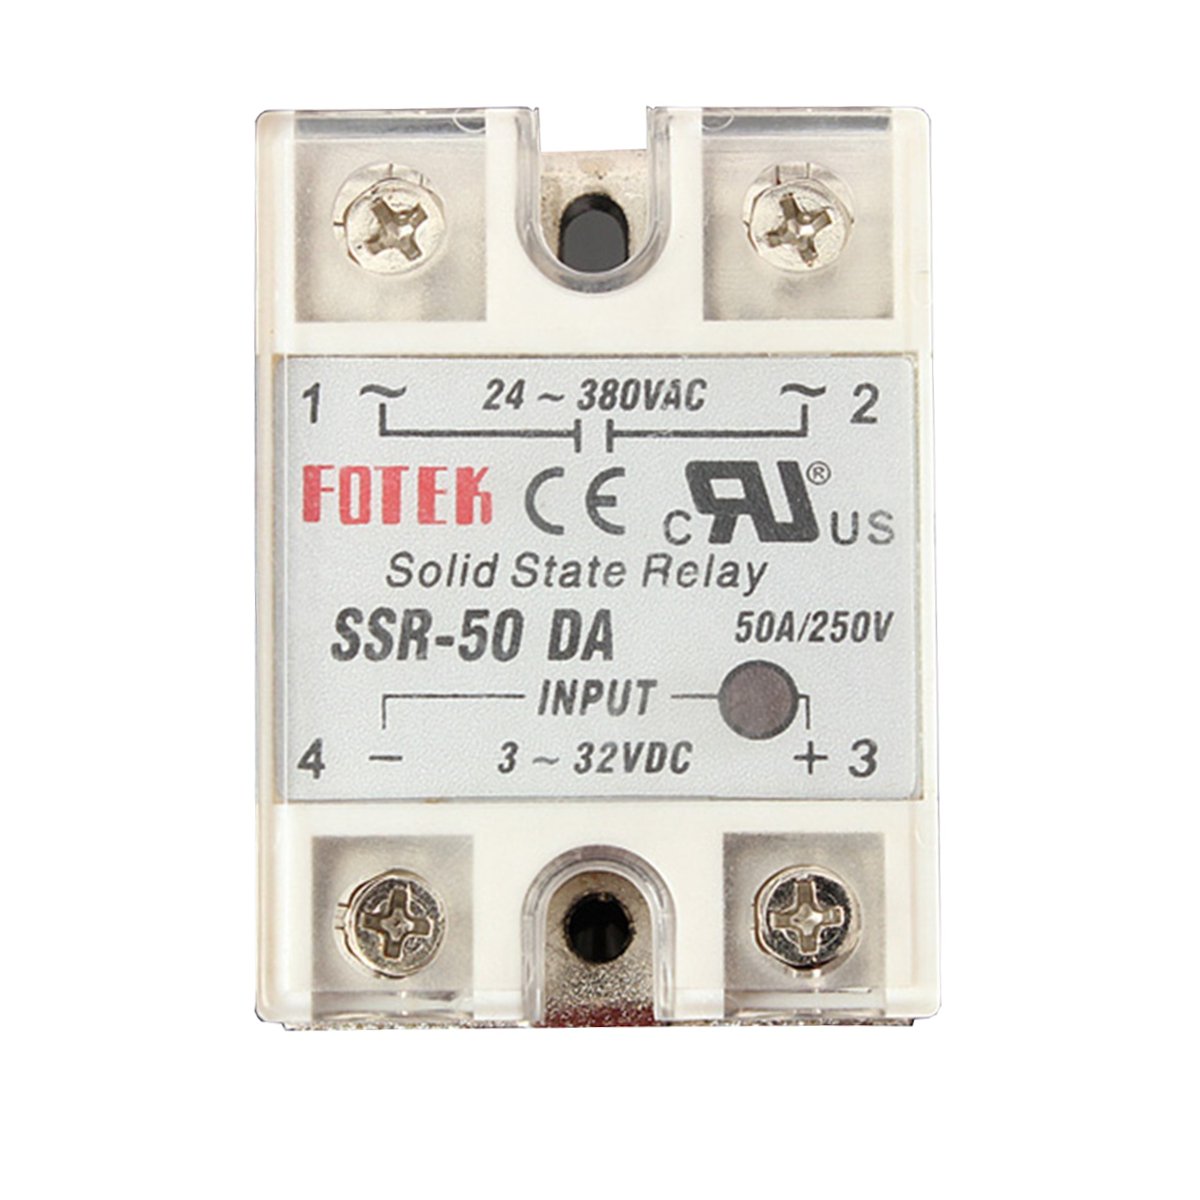 C-FUNN Solid State Relay Ssr-50Da 3-32Vdc 50A/250V Output 24-380Vac W/Cover von C-FUNN